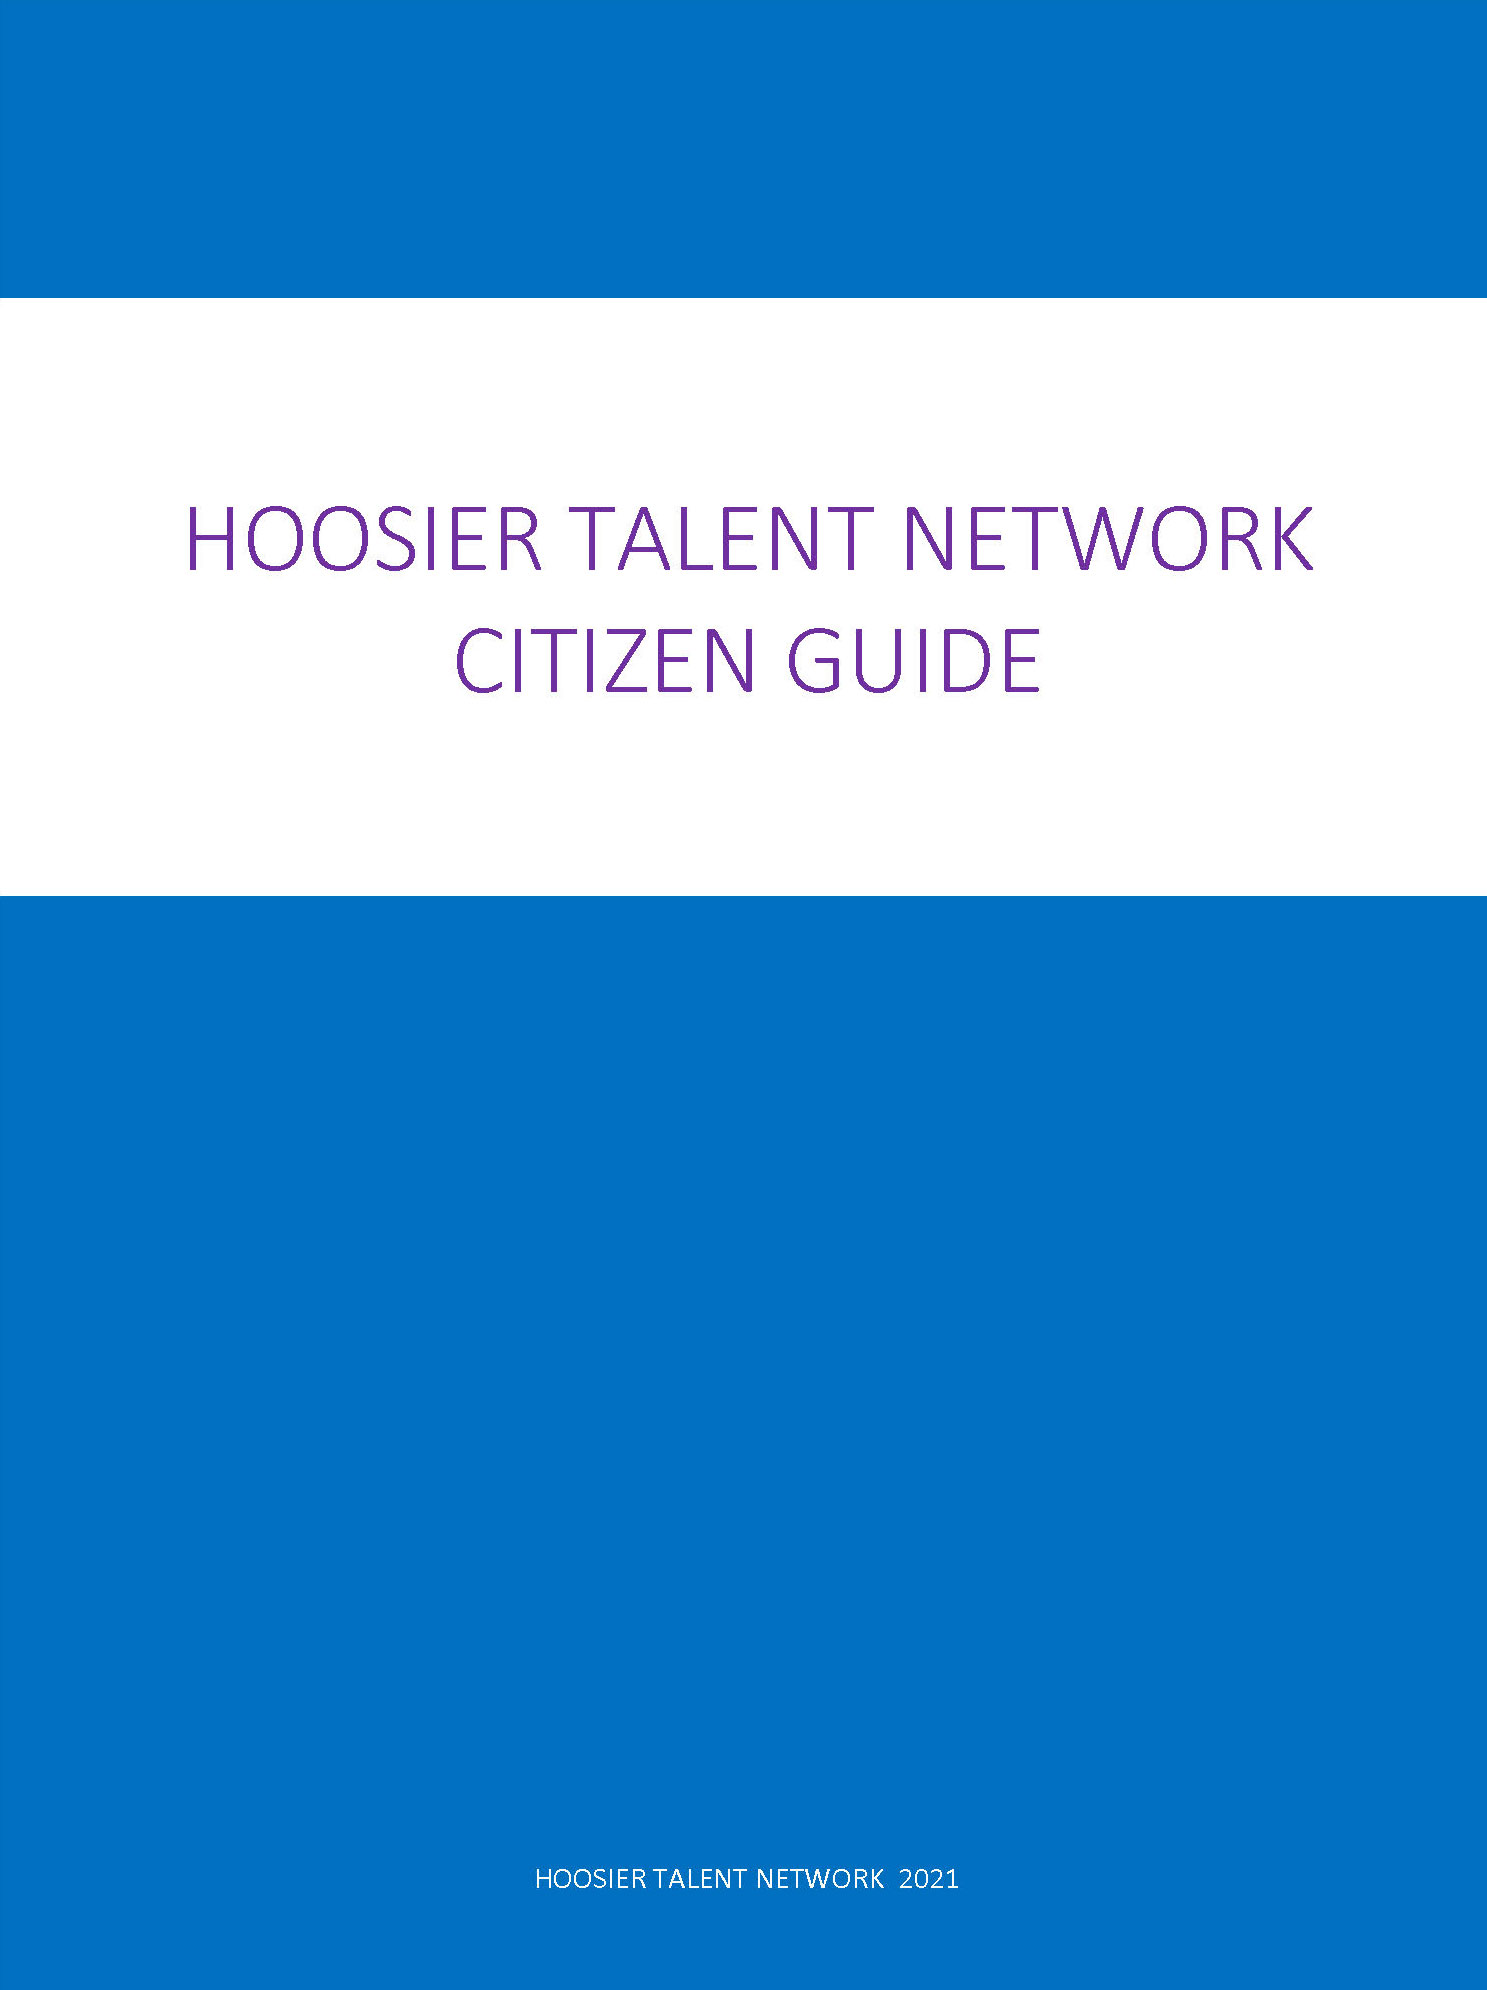 Hoosier Talent Network Citizen Guide